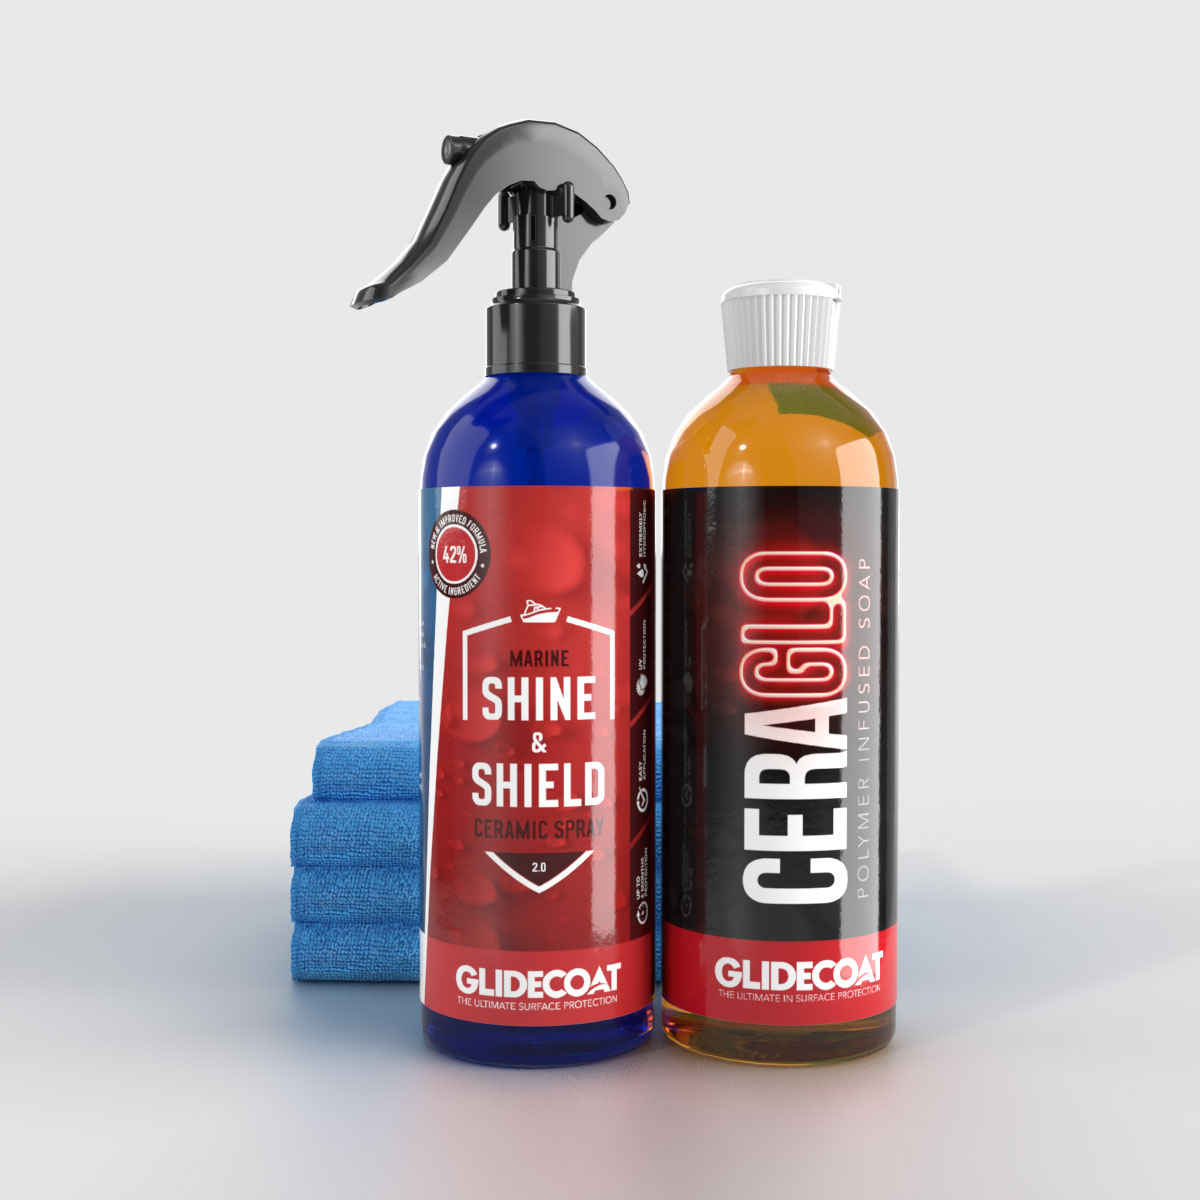 Glidecoat Marine Shine & Shield, 42% Ceramic Spray, Better than Boat Wax, Hydrophobic Spray with UV Protection, Marine Sealant Ceramic Spray, Sealant Boat Maintenance